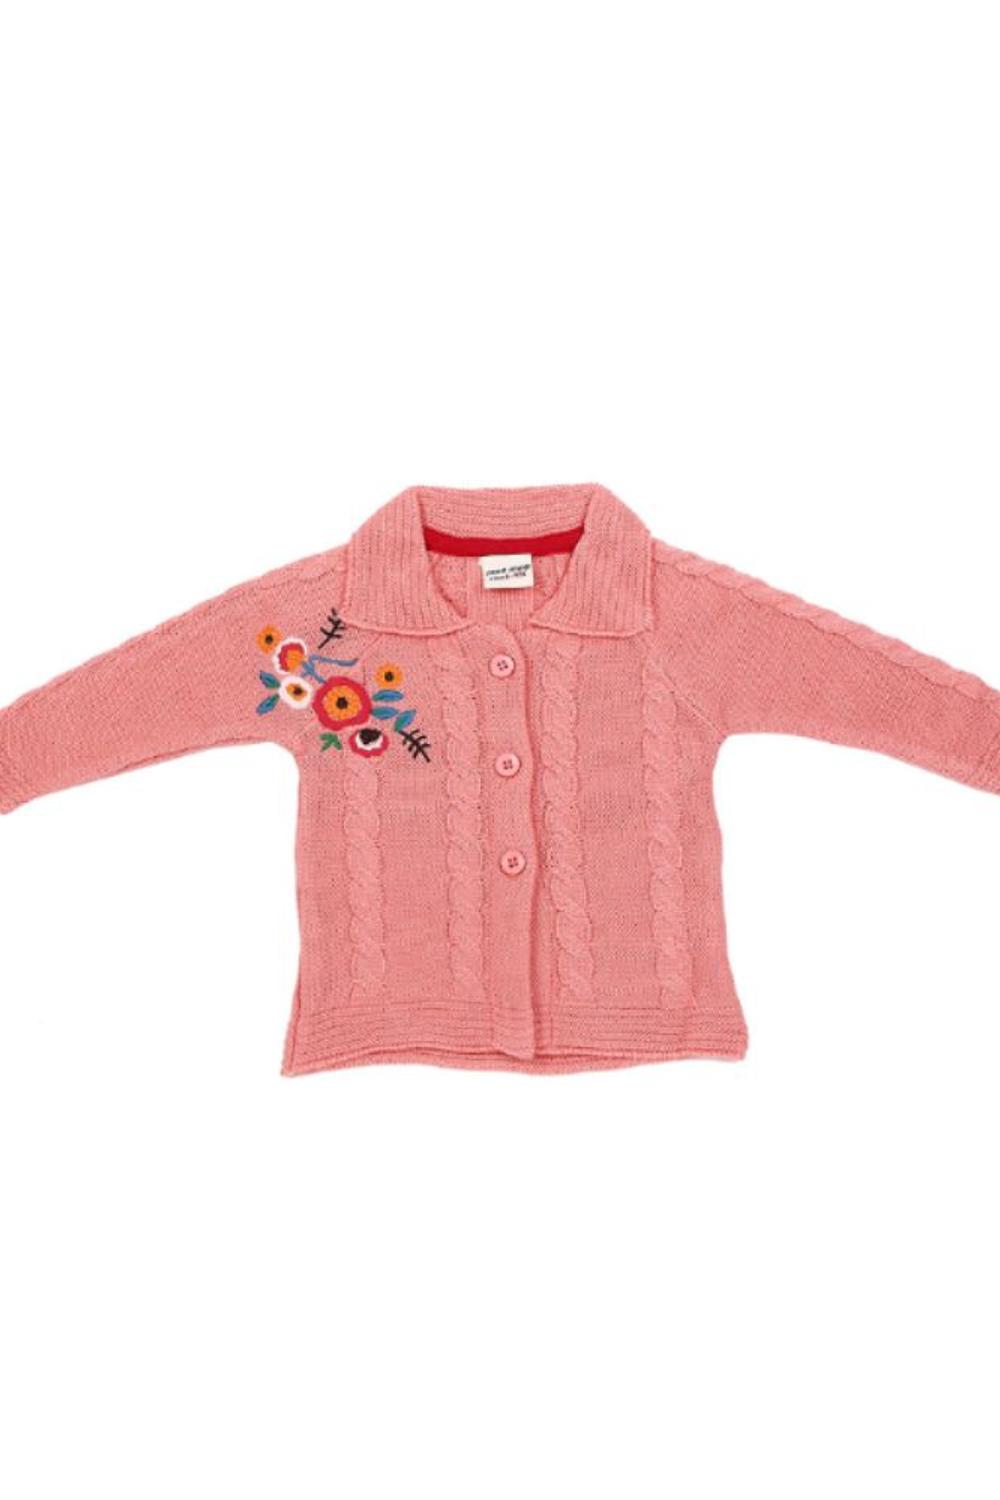 Mee Mee Girls Full sleeve Sweater - Baby Pink